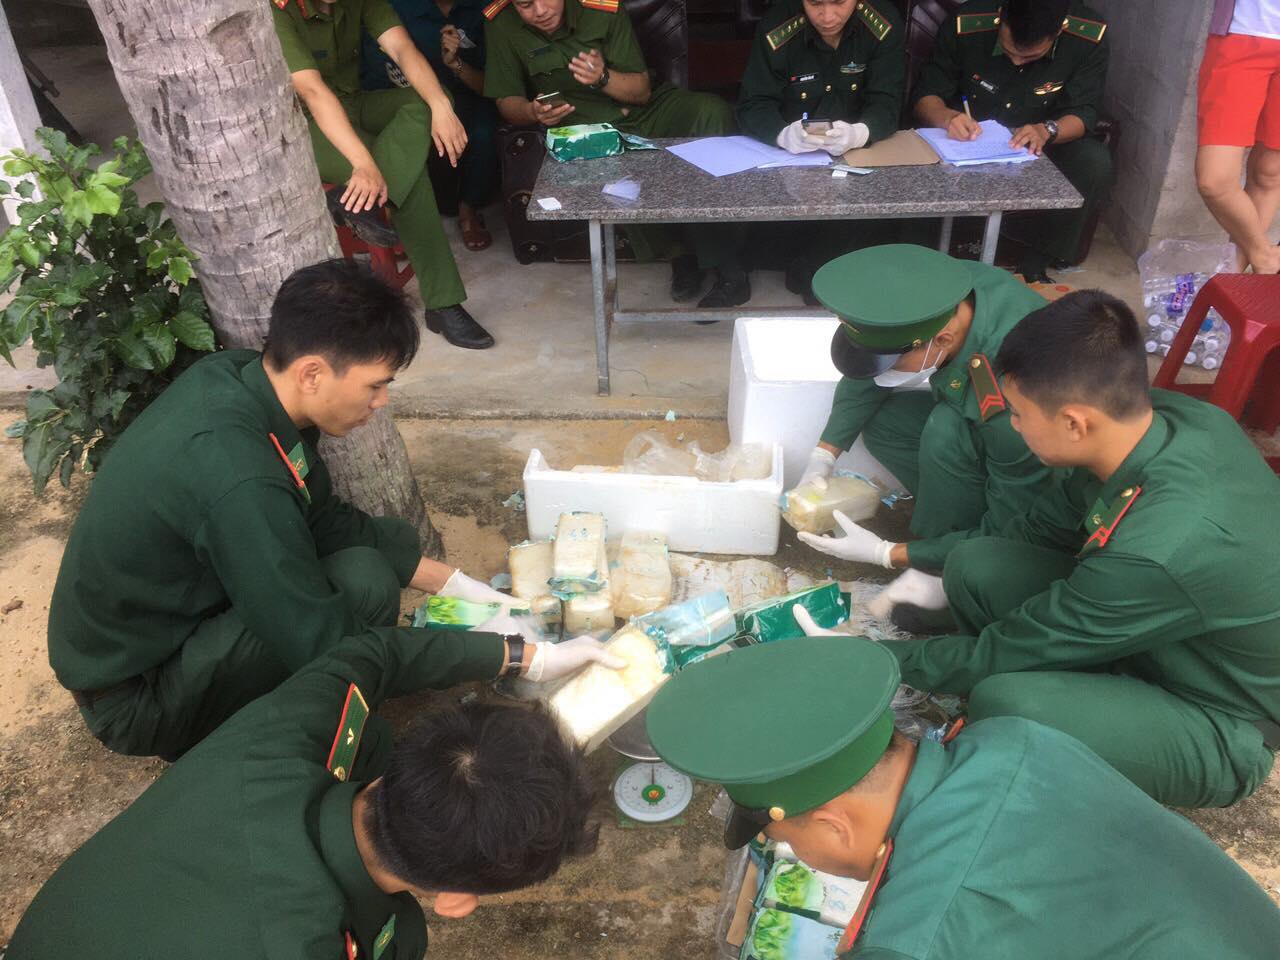 20kg of ketamine washes up ashore in central Vietnam